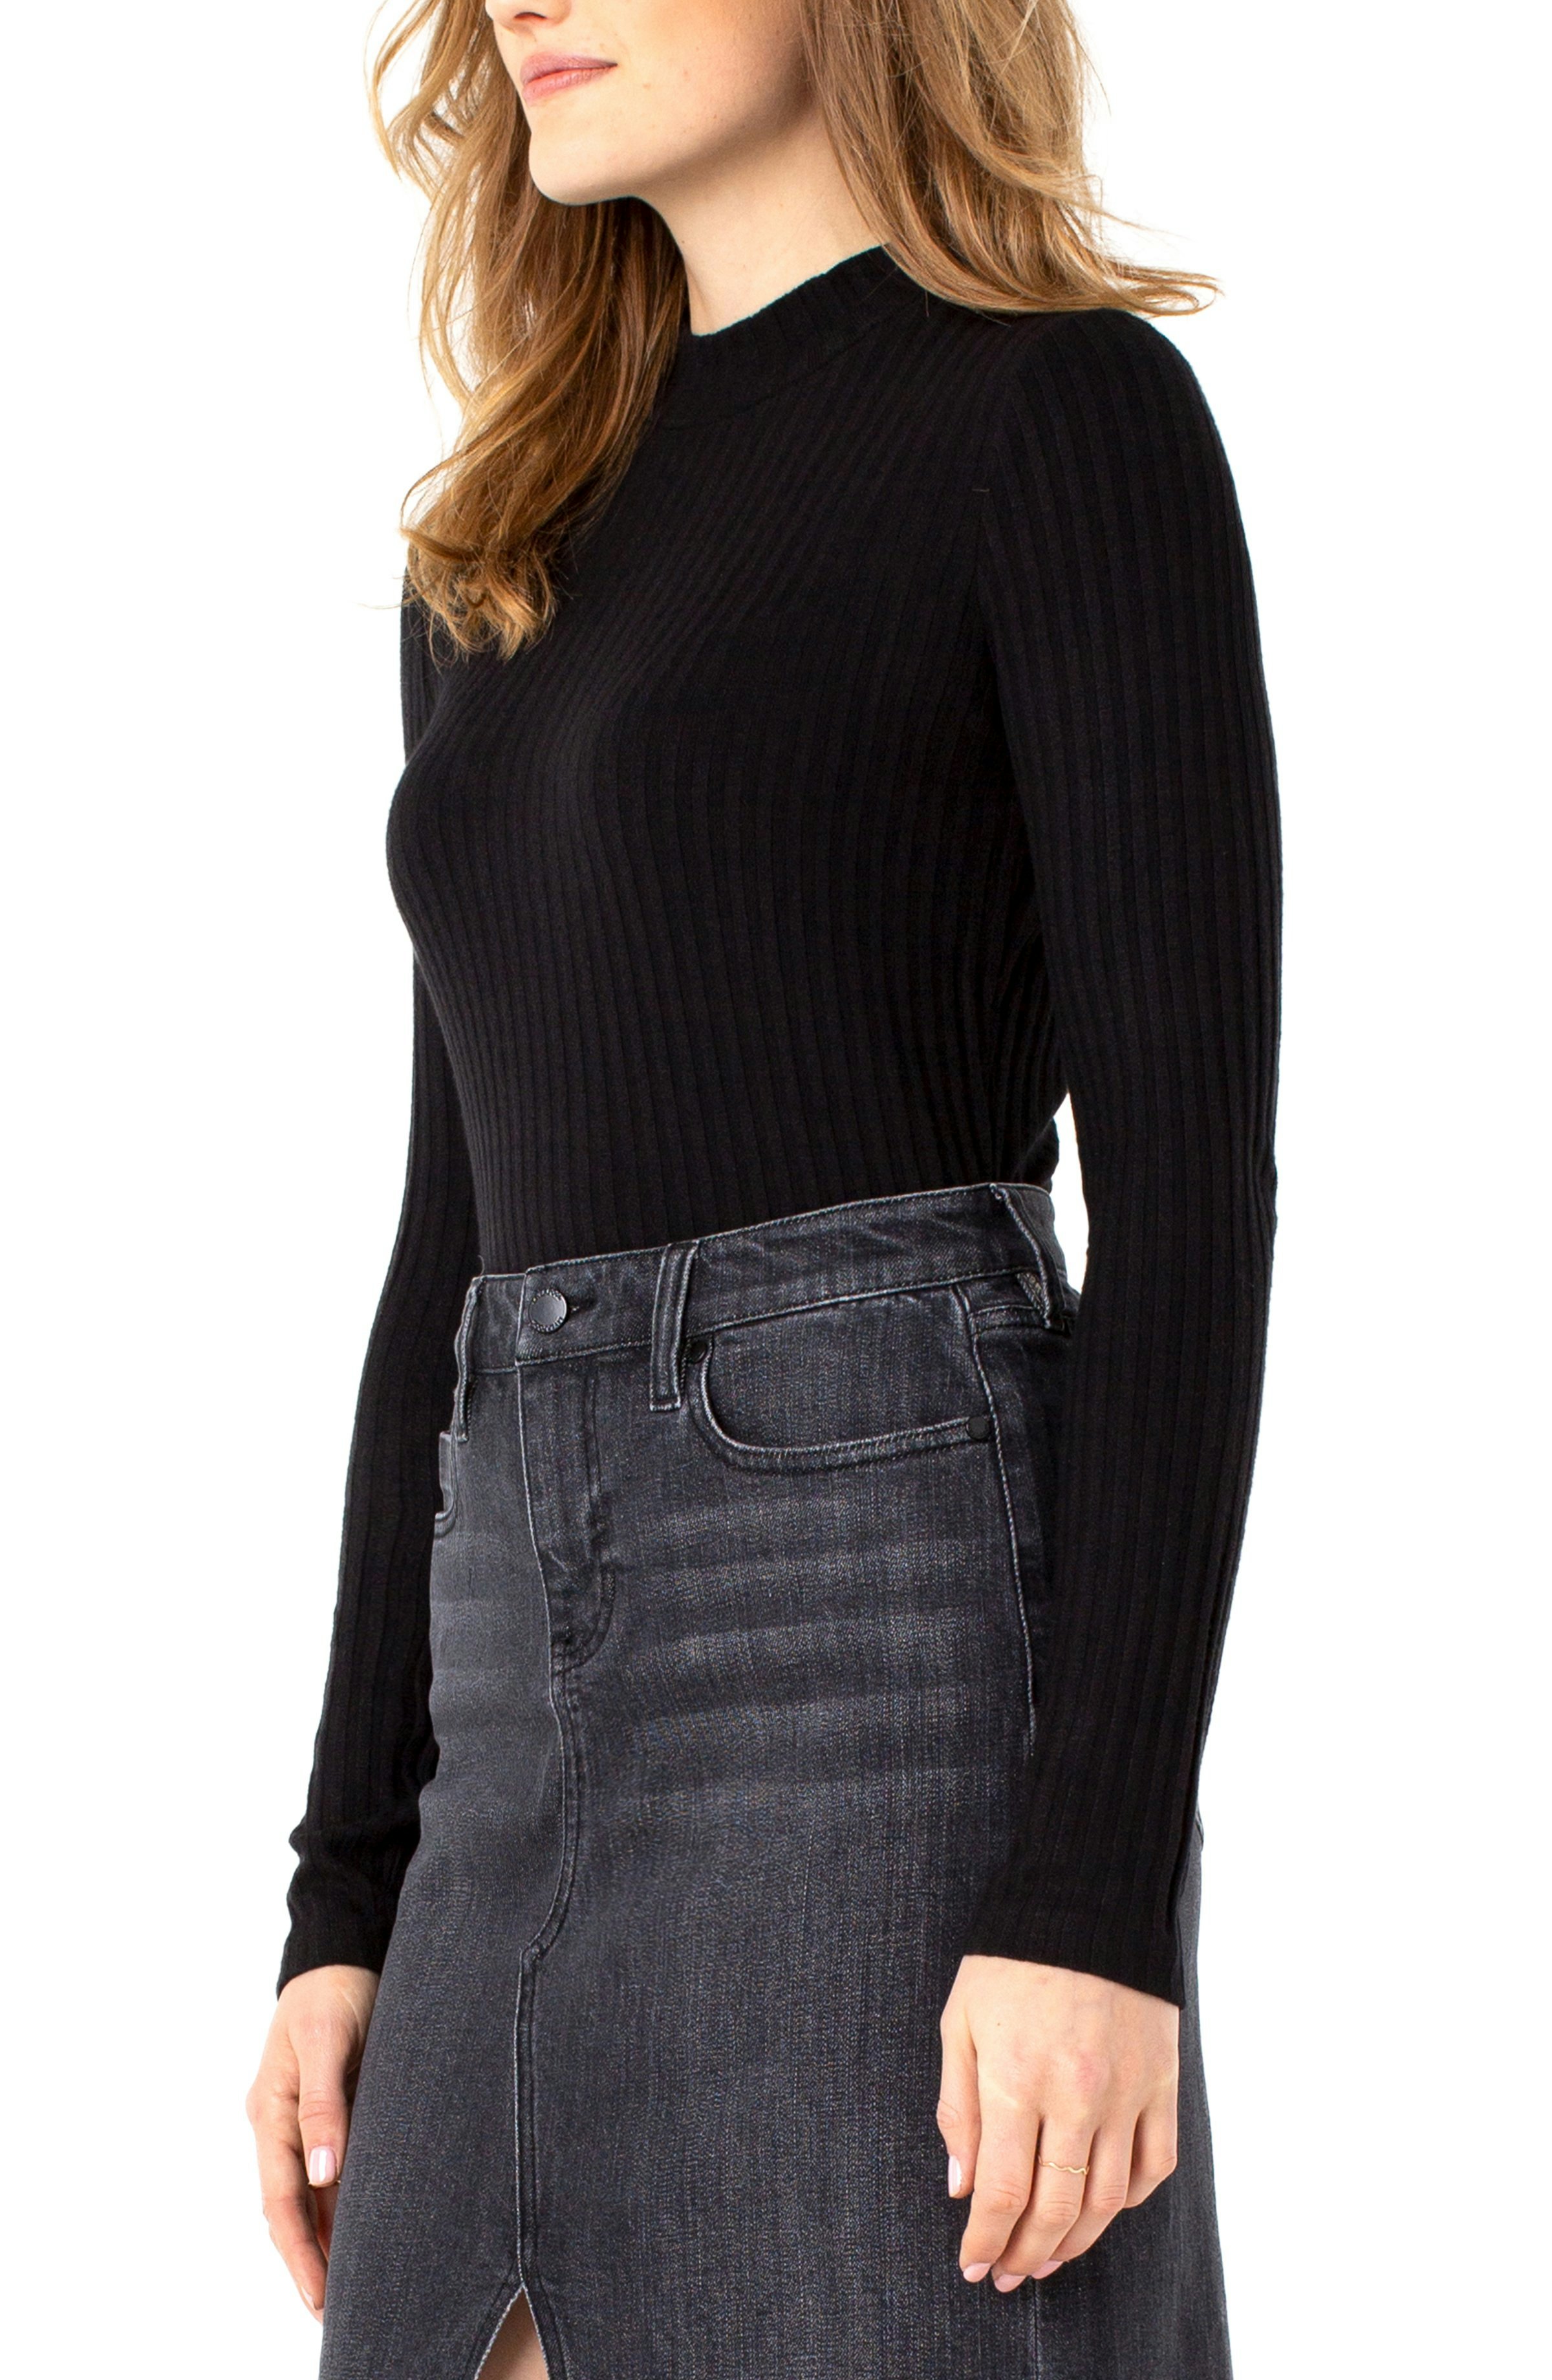 SayahMen Solid Leisure Knitting Long-Sleeve Plus-Size Mock Neck Sweater Top